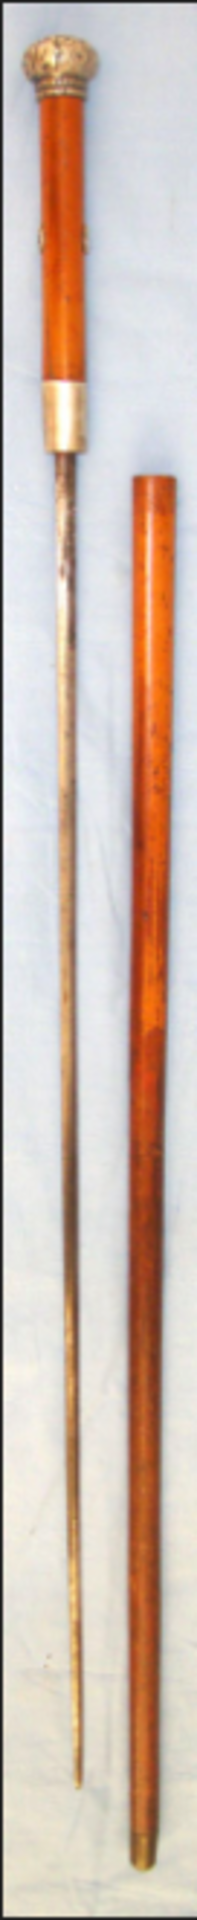 Victorian/ Edwardian Gentlemans Mallaca Sword Stick - Image 3 of 3